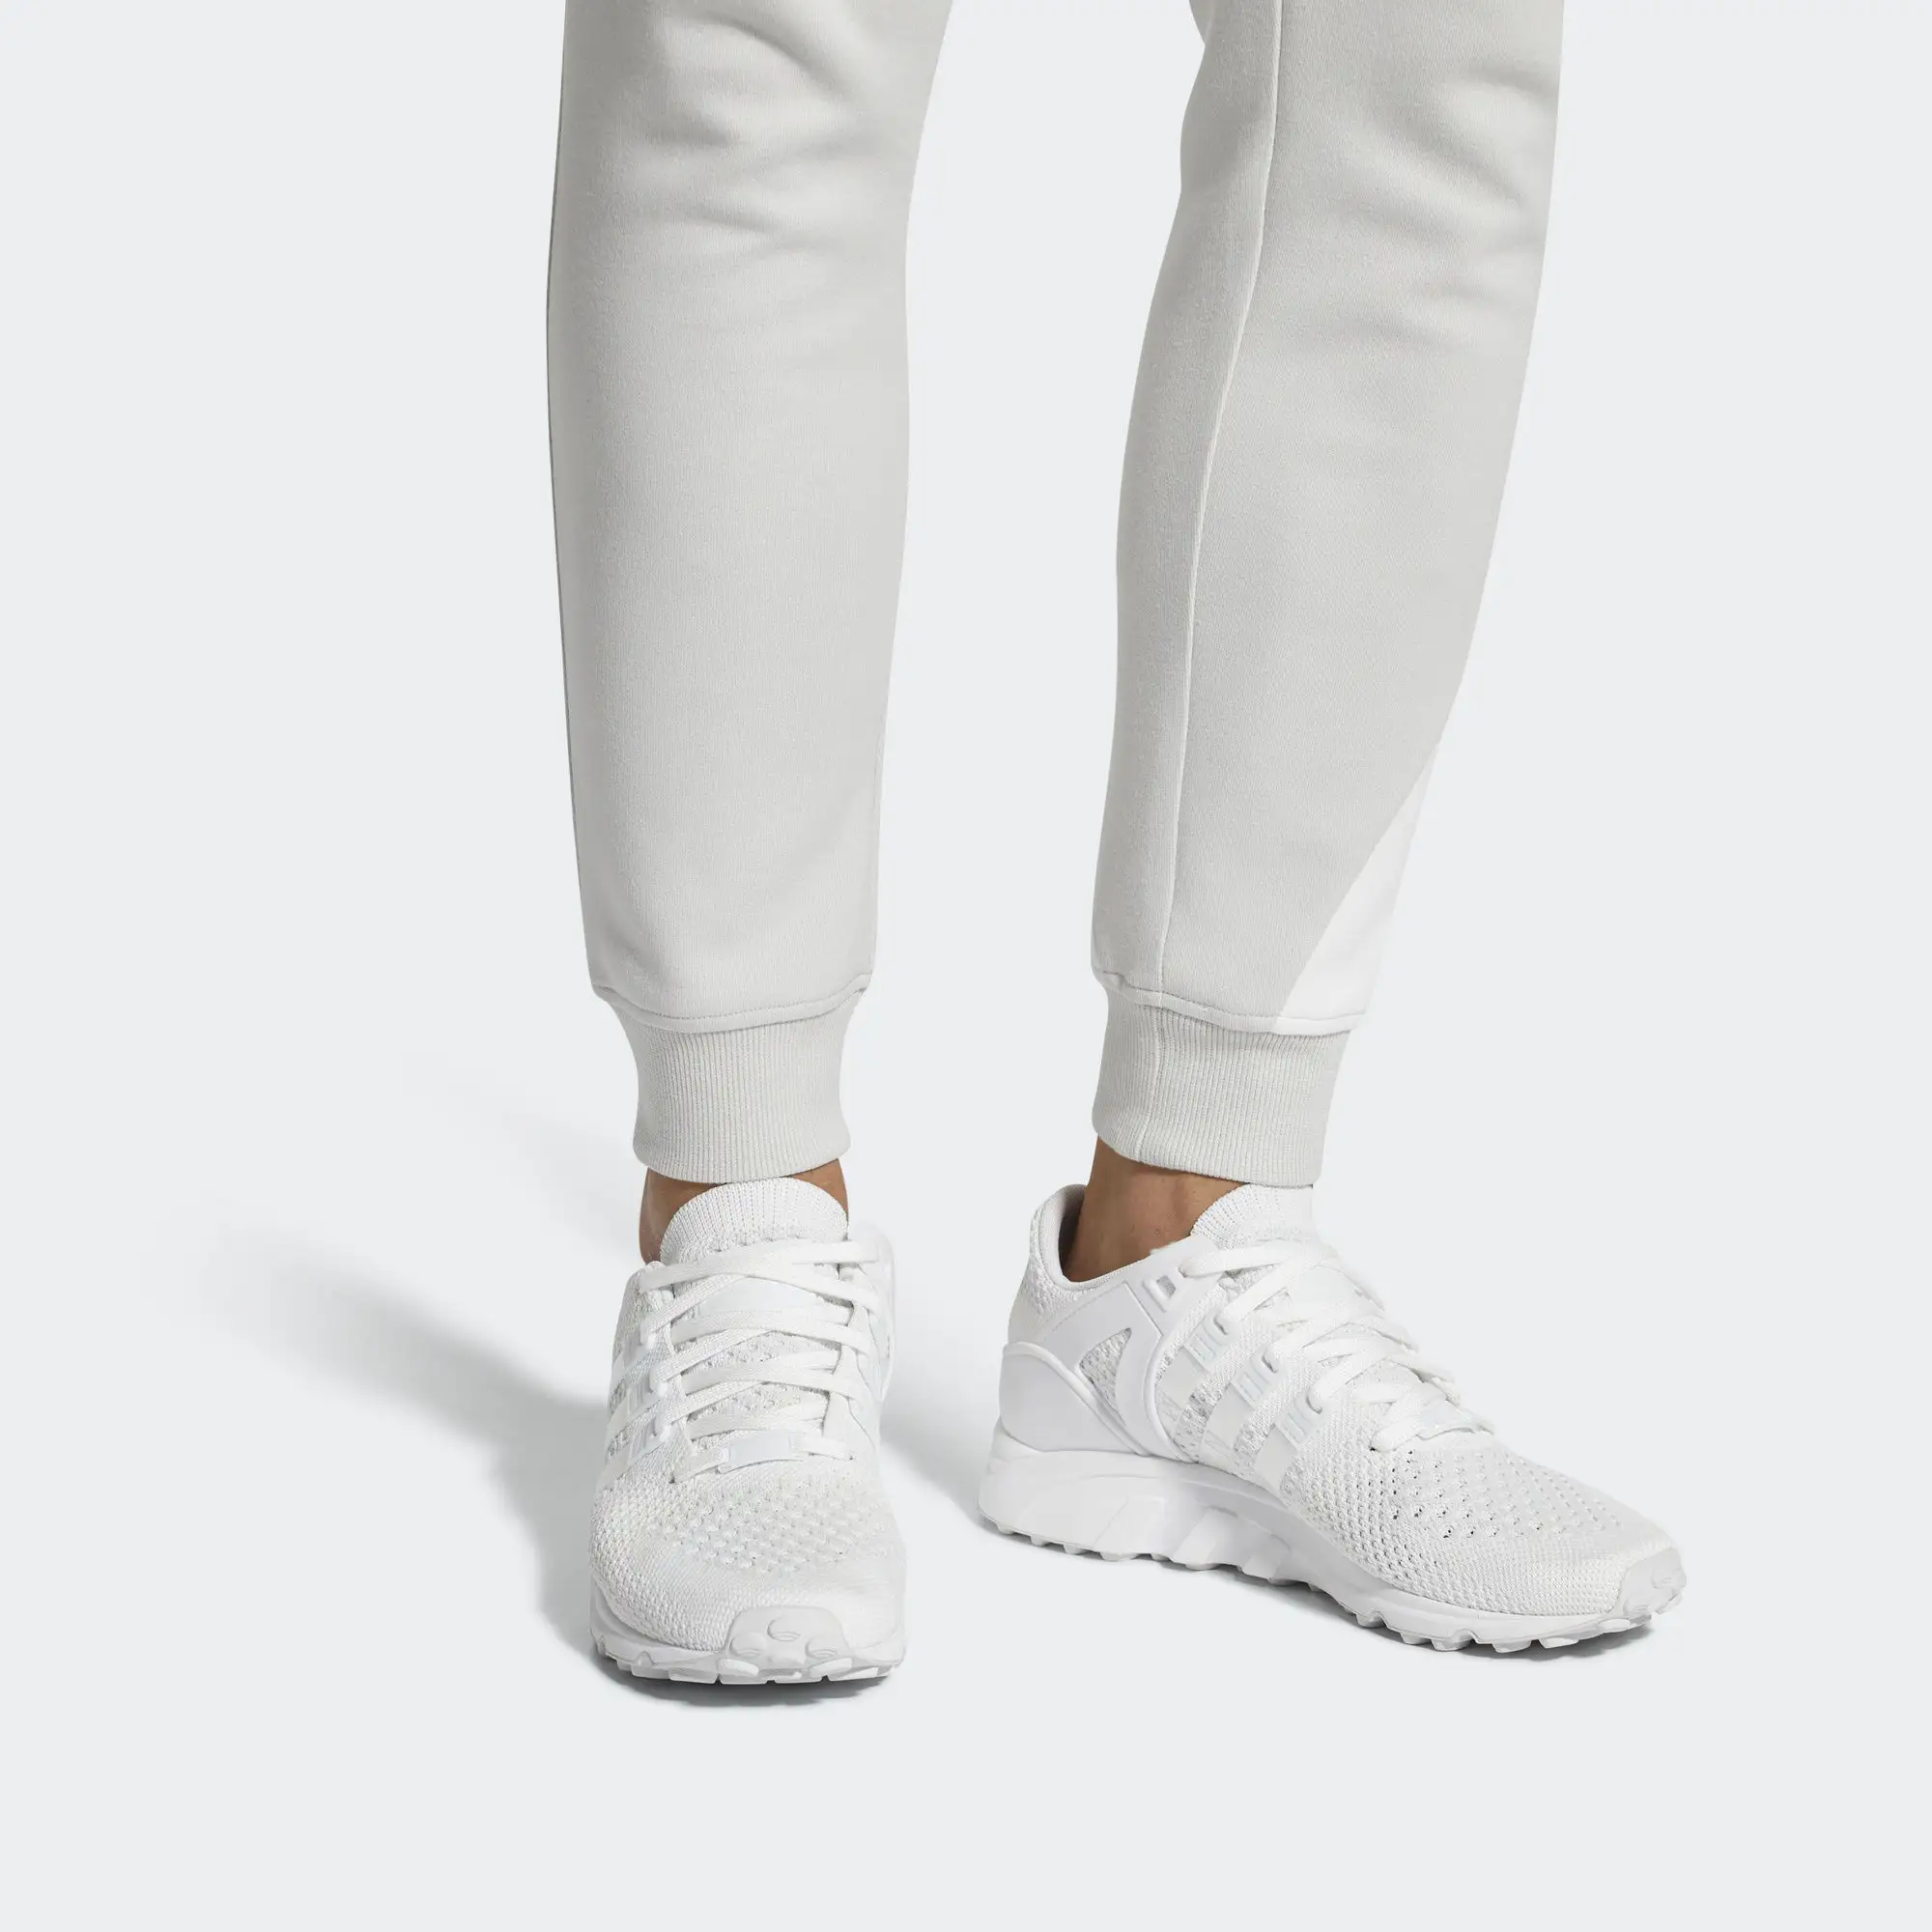 Adidas Originals EQT Support RF Primeknit - Men Shoes (Triple White) CQ3044  | Lazada Singapore